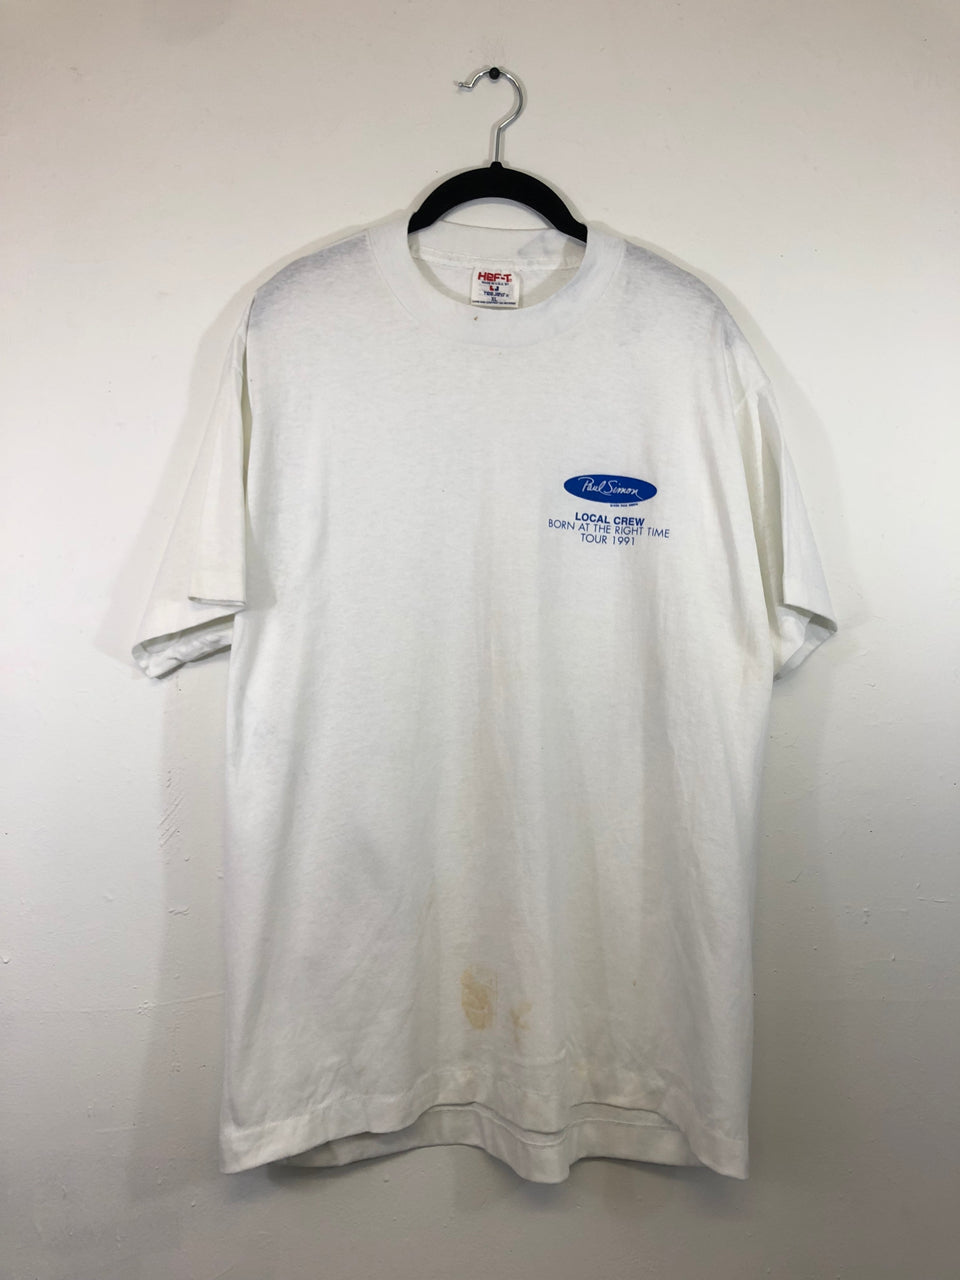 Paul Simon 1991 Local Crew Tour T-Shirt